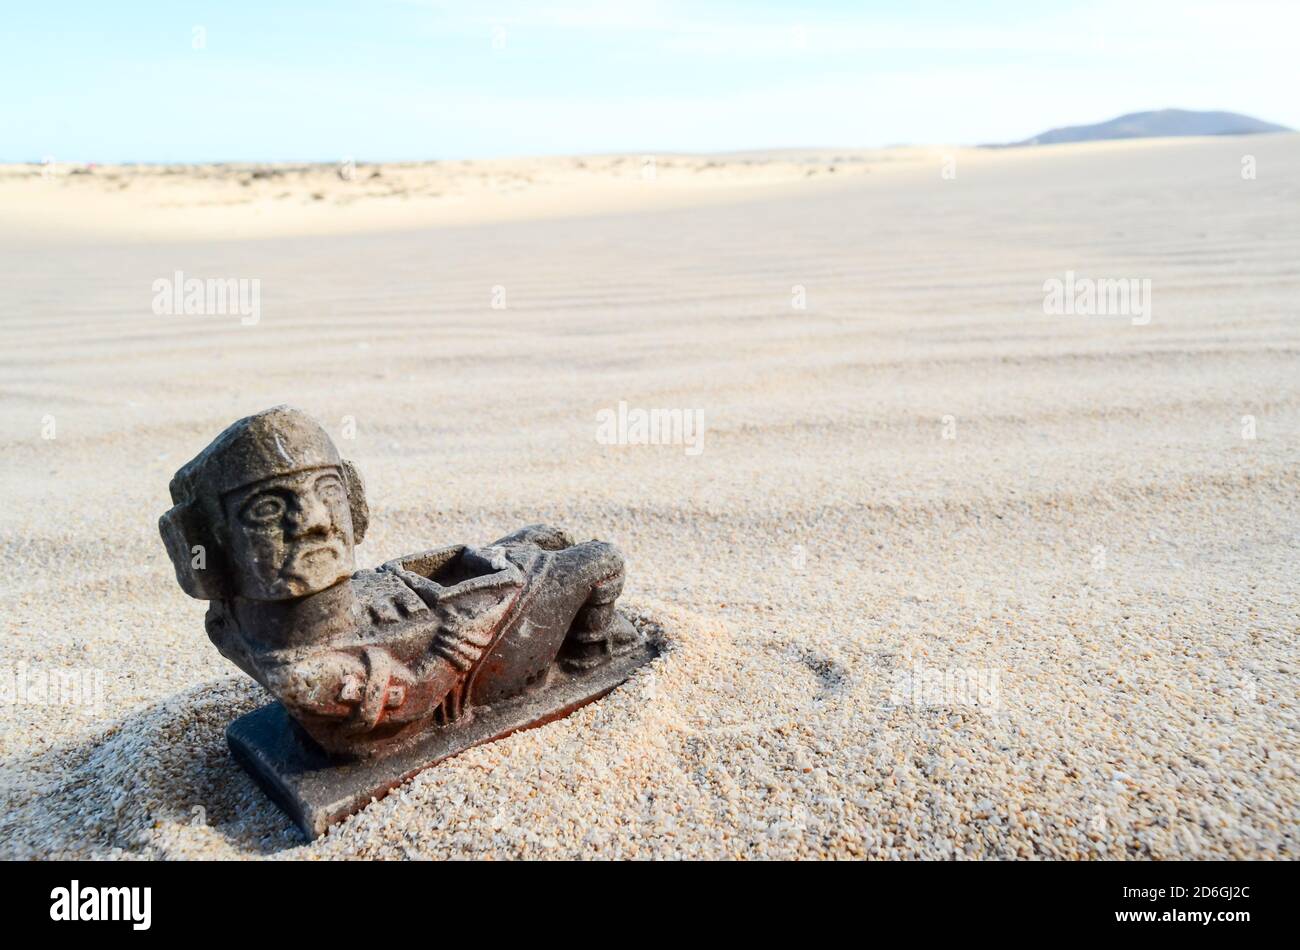 Object in the Dry Desert Stock Photo